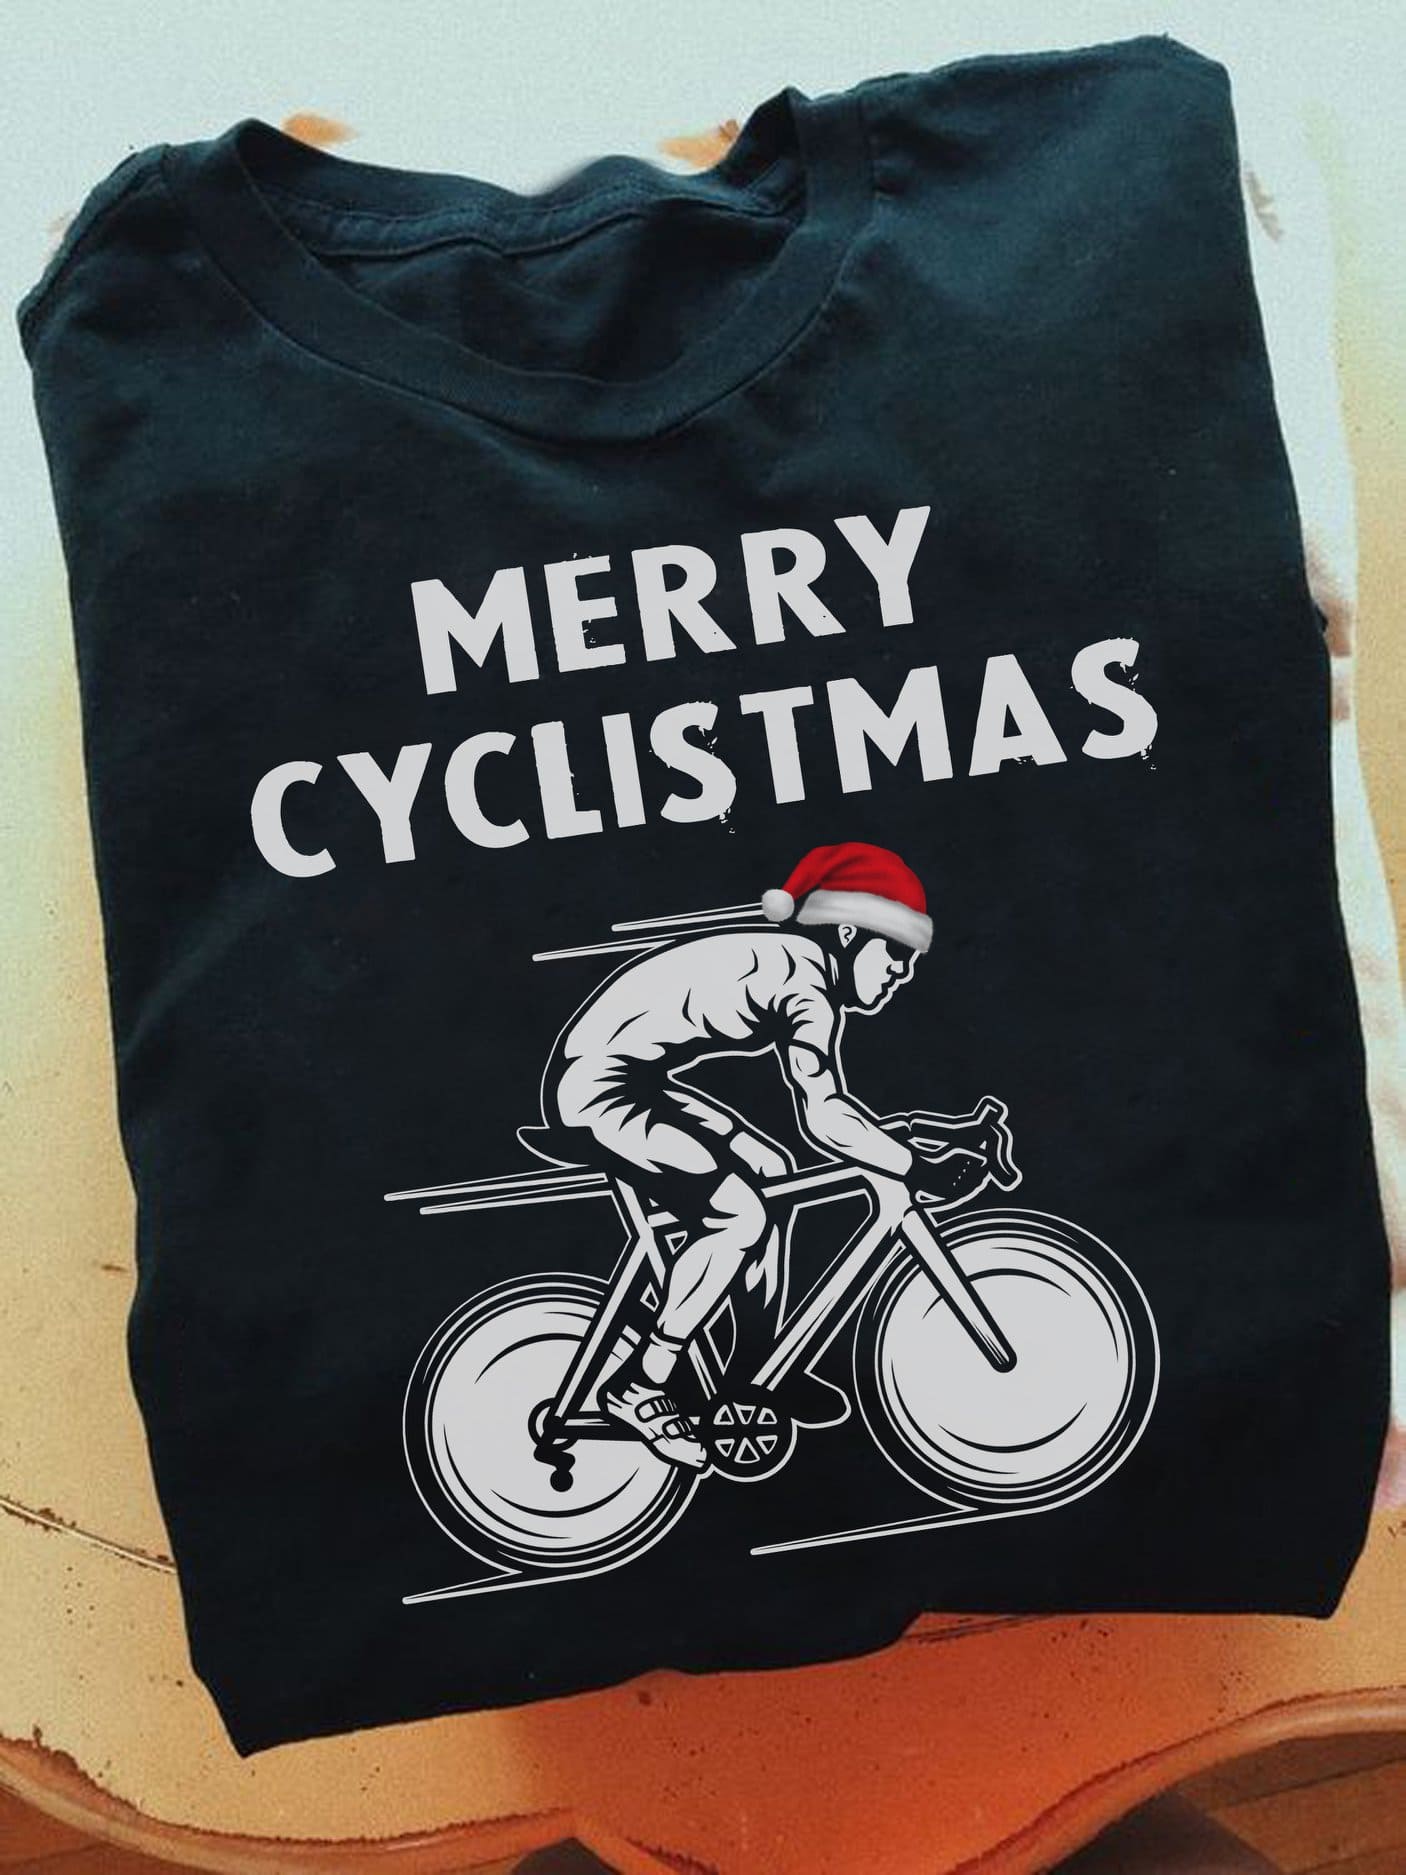 Merry cyclistmas - Christmas gift for bikers, Christmas ugly sweater